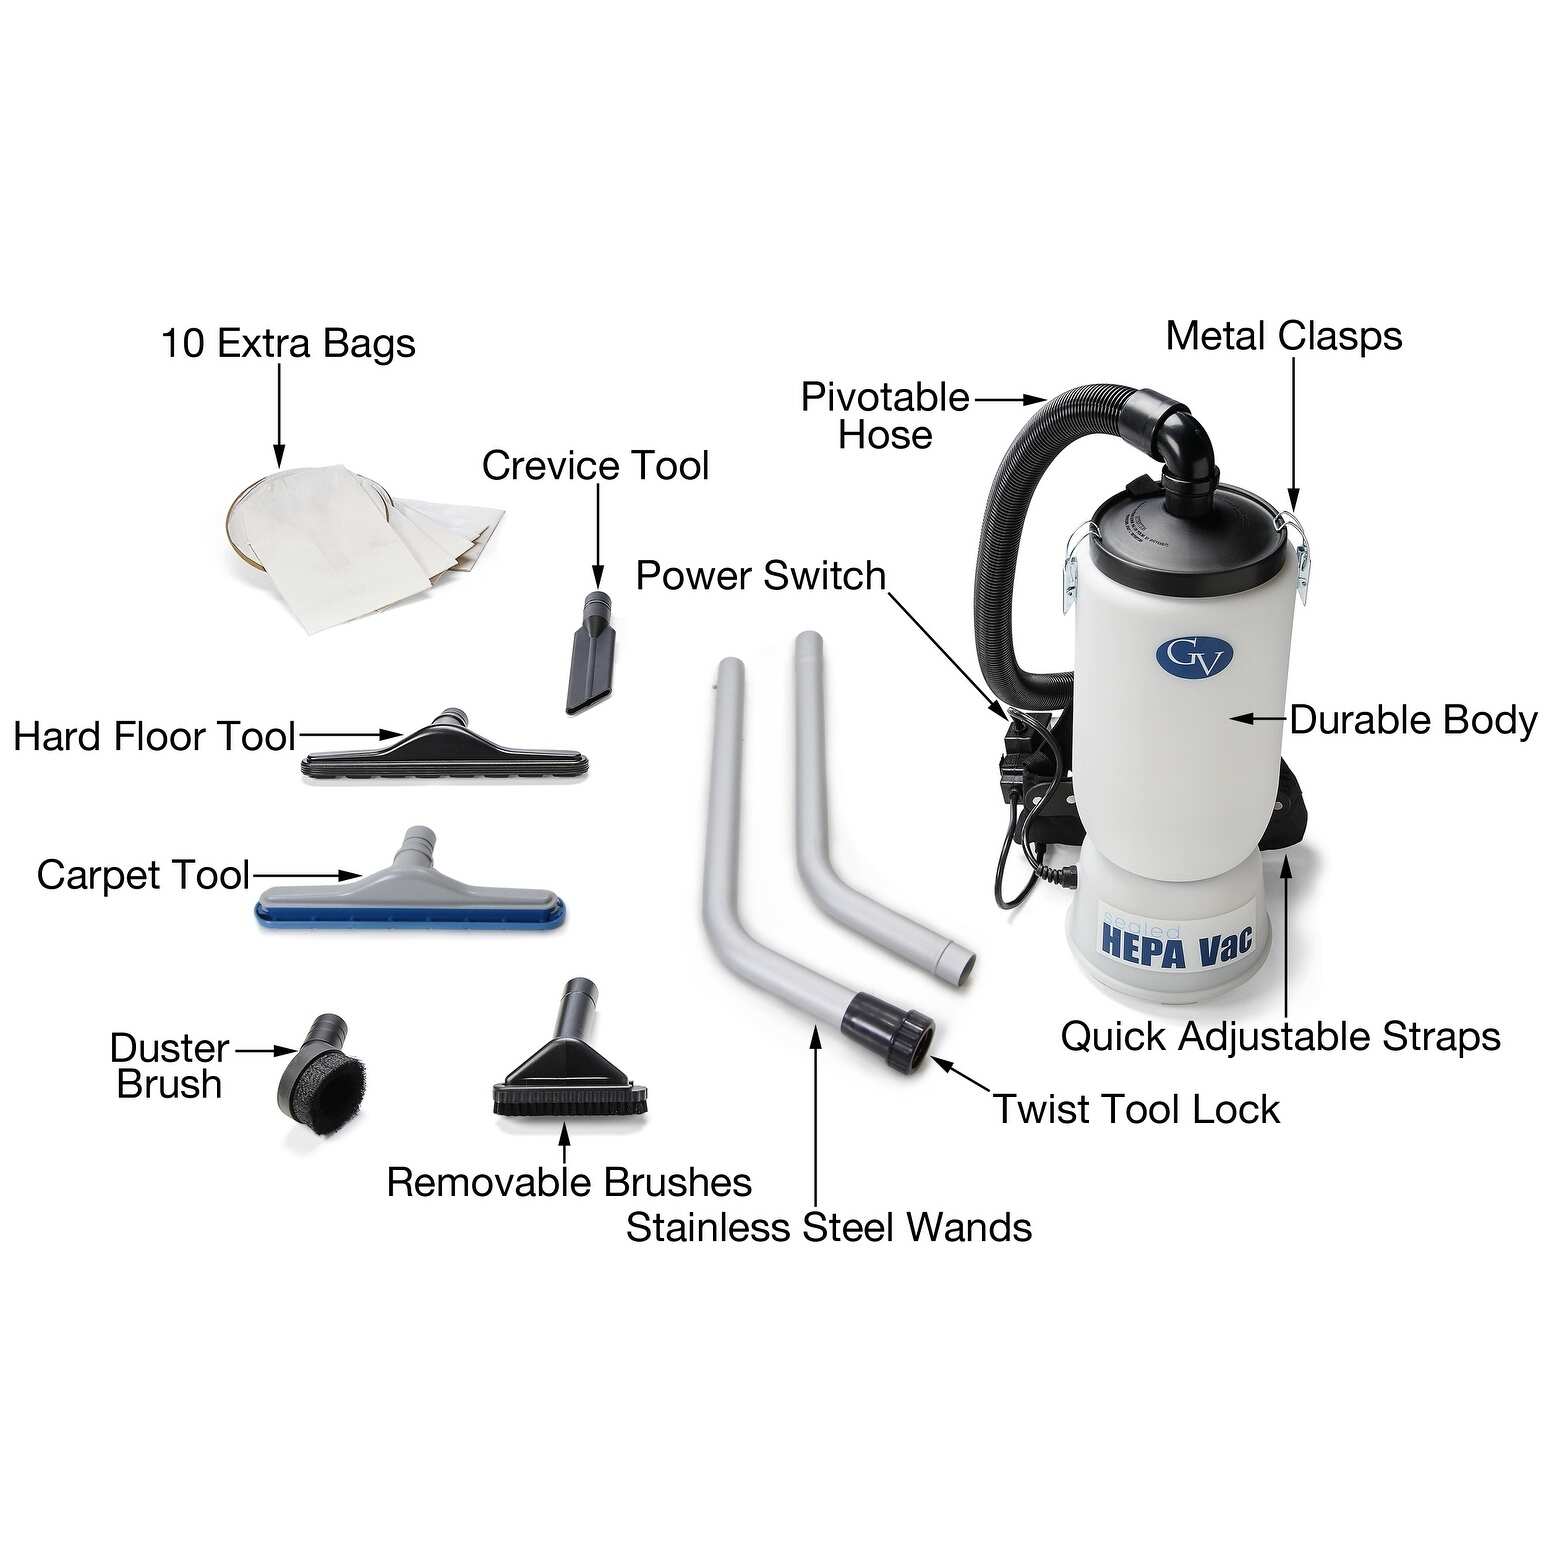 GV 6-quart Sealed HEPA Backpack Vacuum with Professional Tool Kit